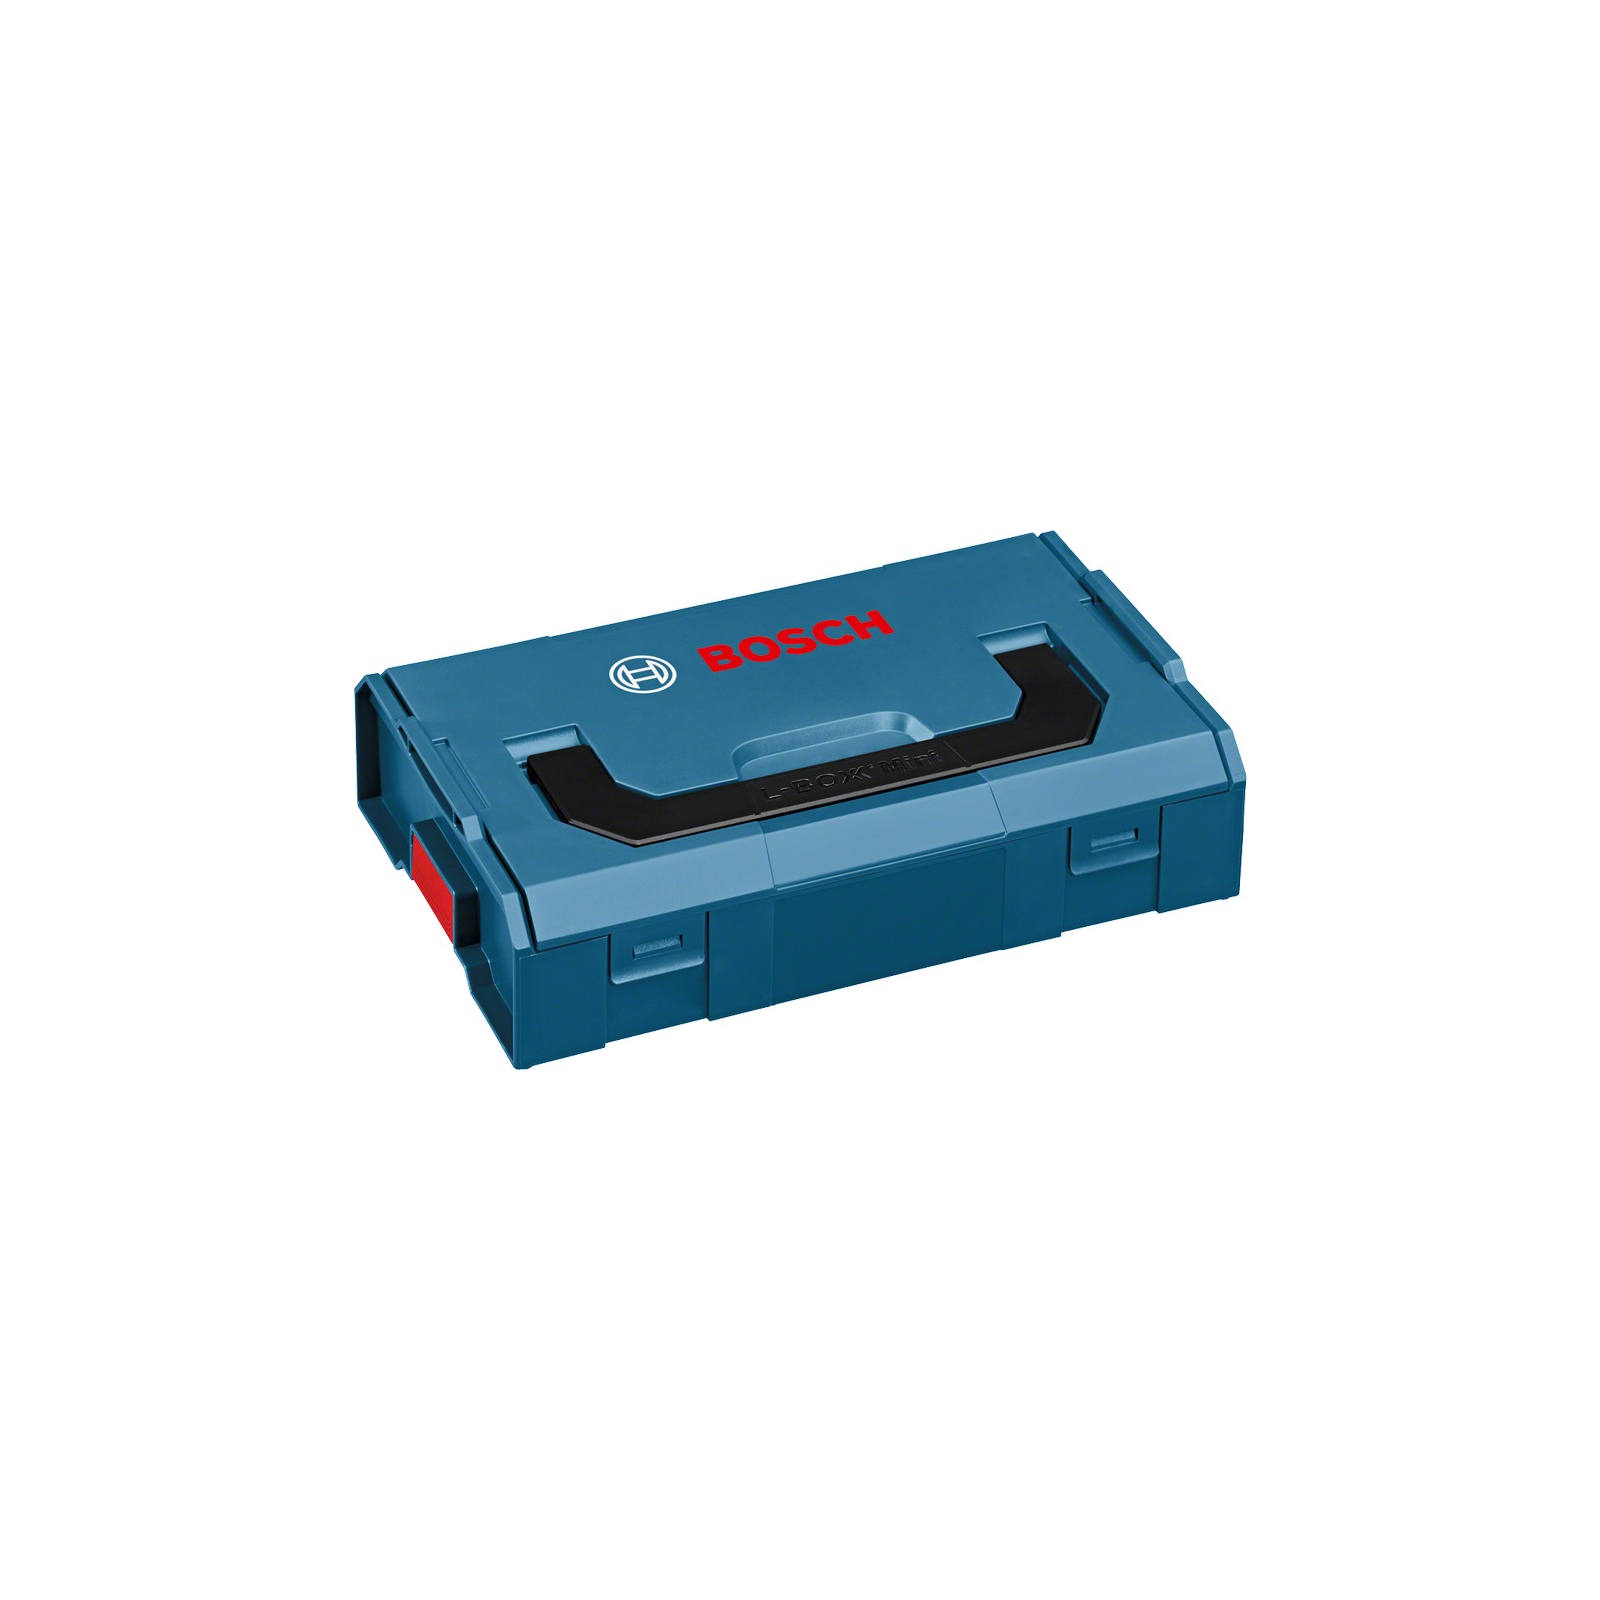 Ящик для інструментів Bosch L-BOXX Mini (1.600.A00.7SF)